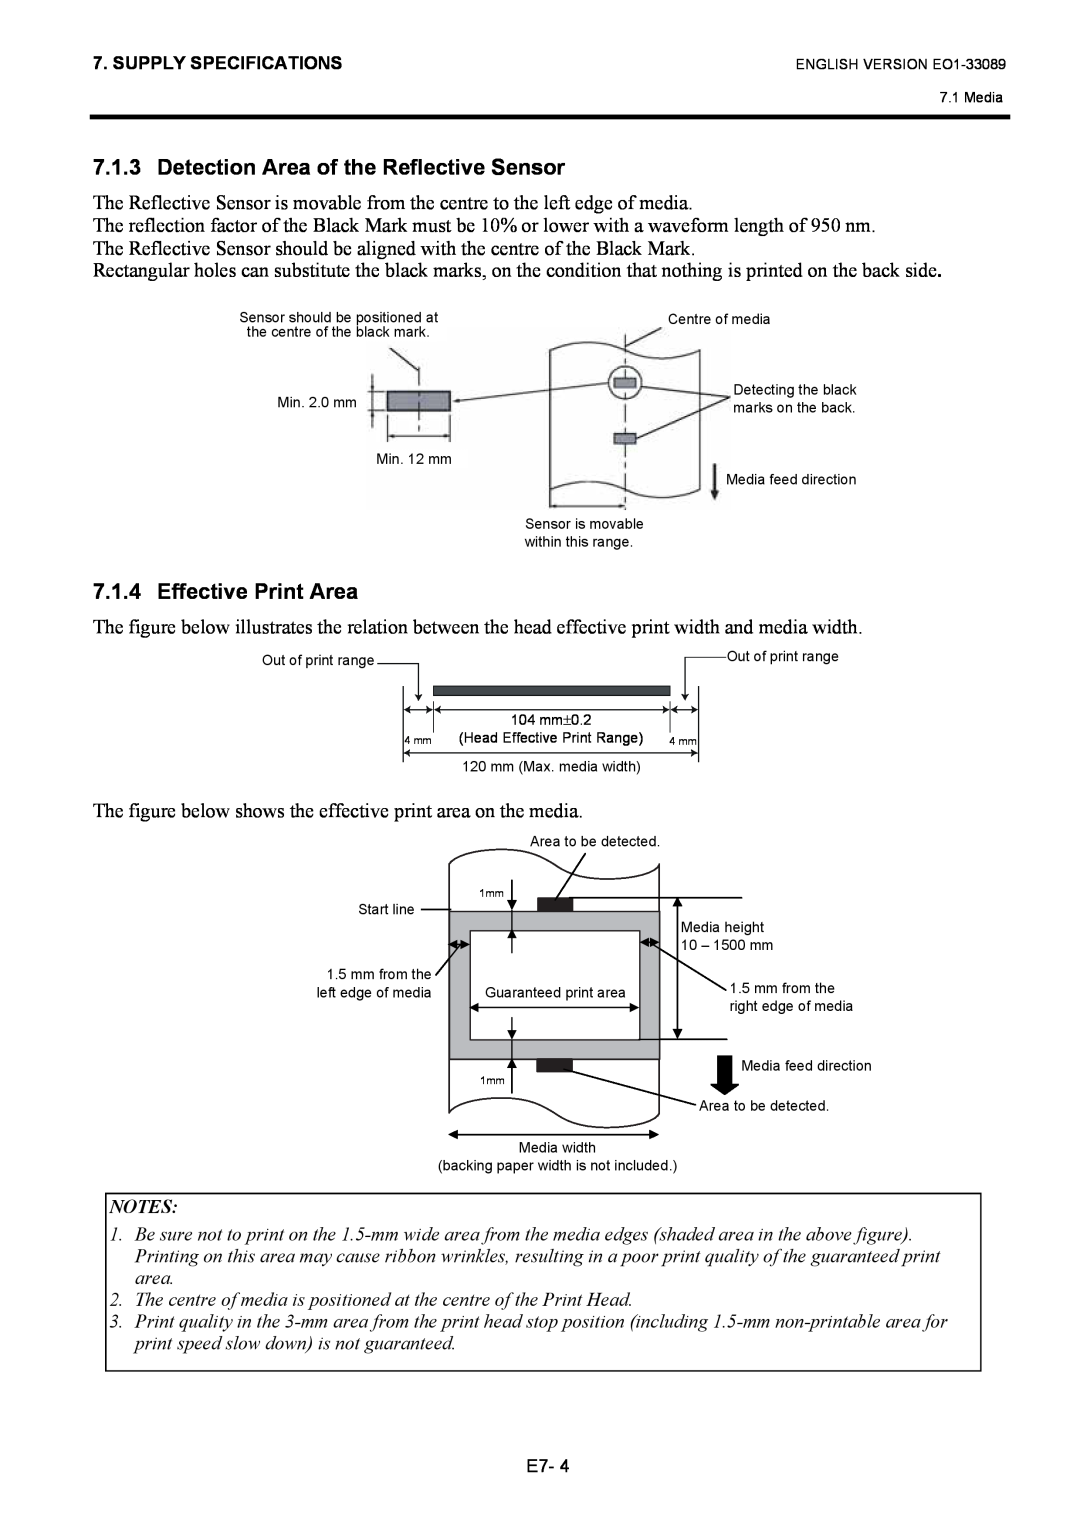 Toshiba B-EX4T1 manual Detection Area of the Reflective Sensor, Effective Print Area 